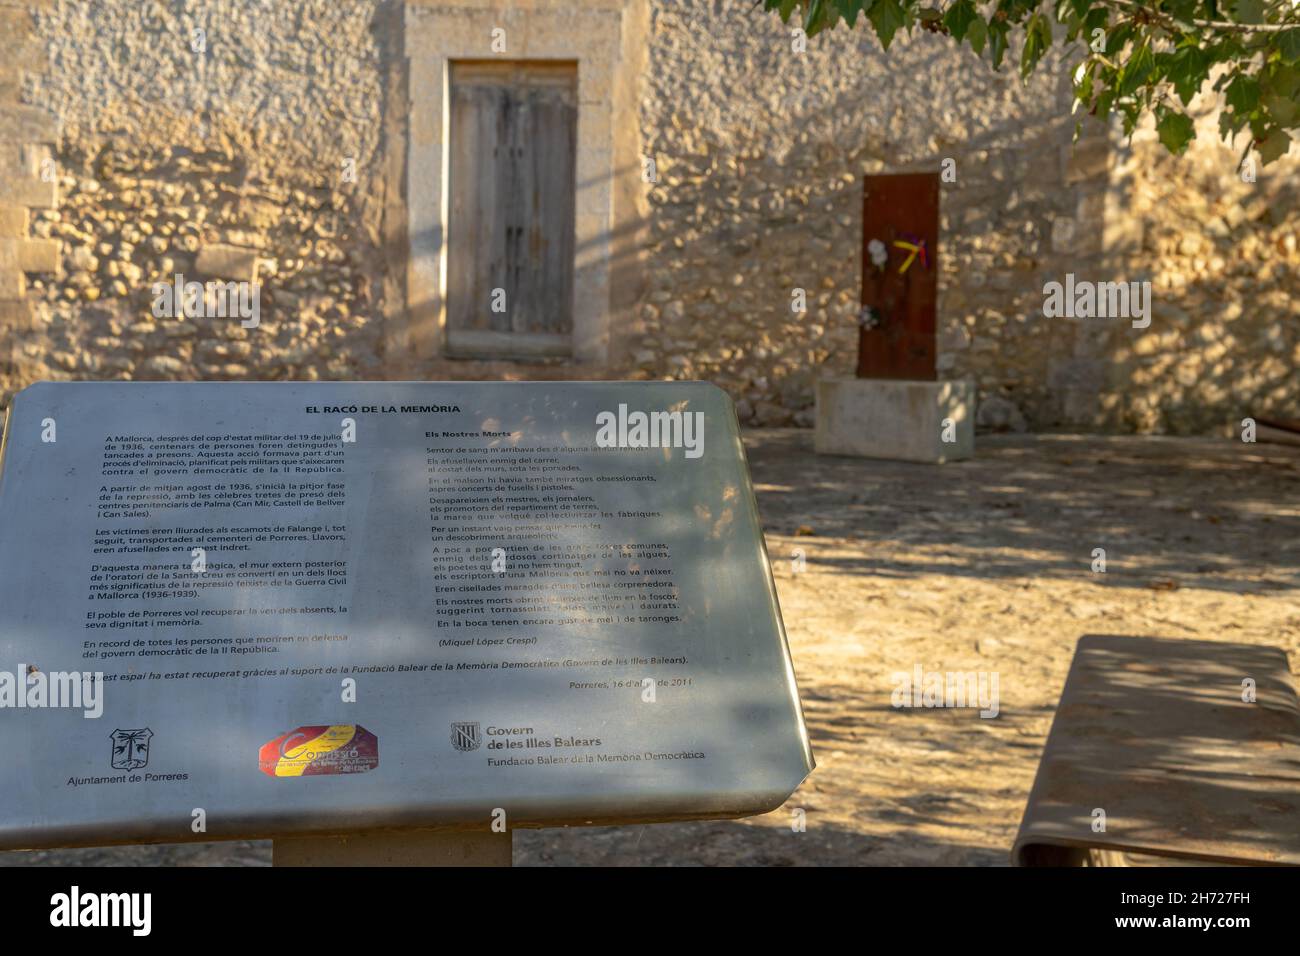 Porreres, Spain; october 12 2021: Monument El Raco de la Memoria dedicated to the victims of the Franco dictatorship in Spain, in the Majorcan town of Stock Photo